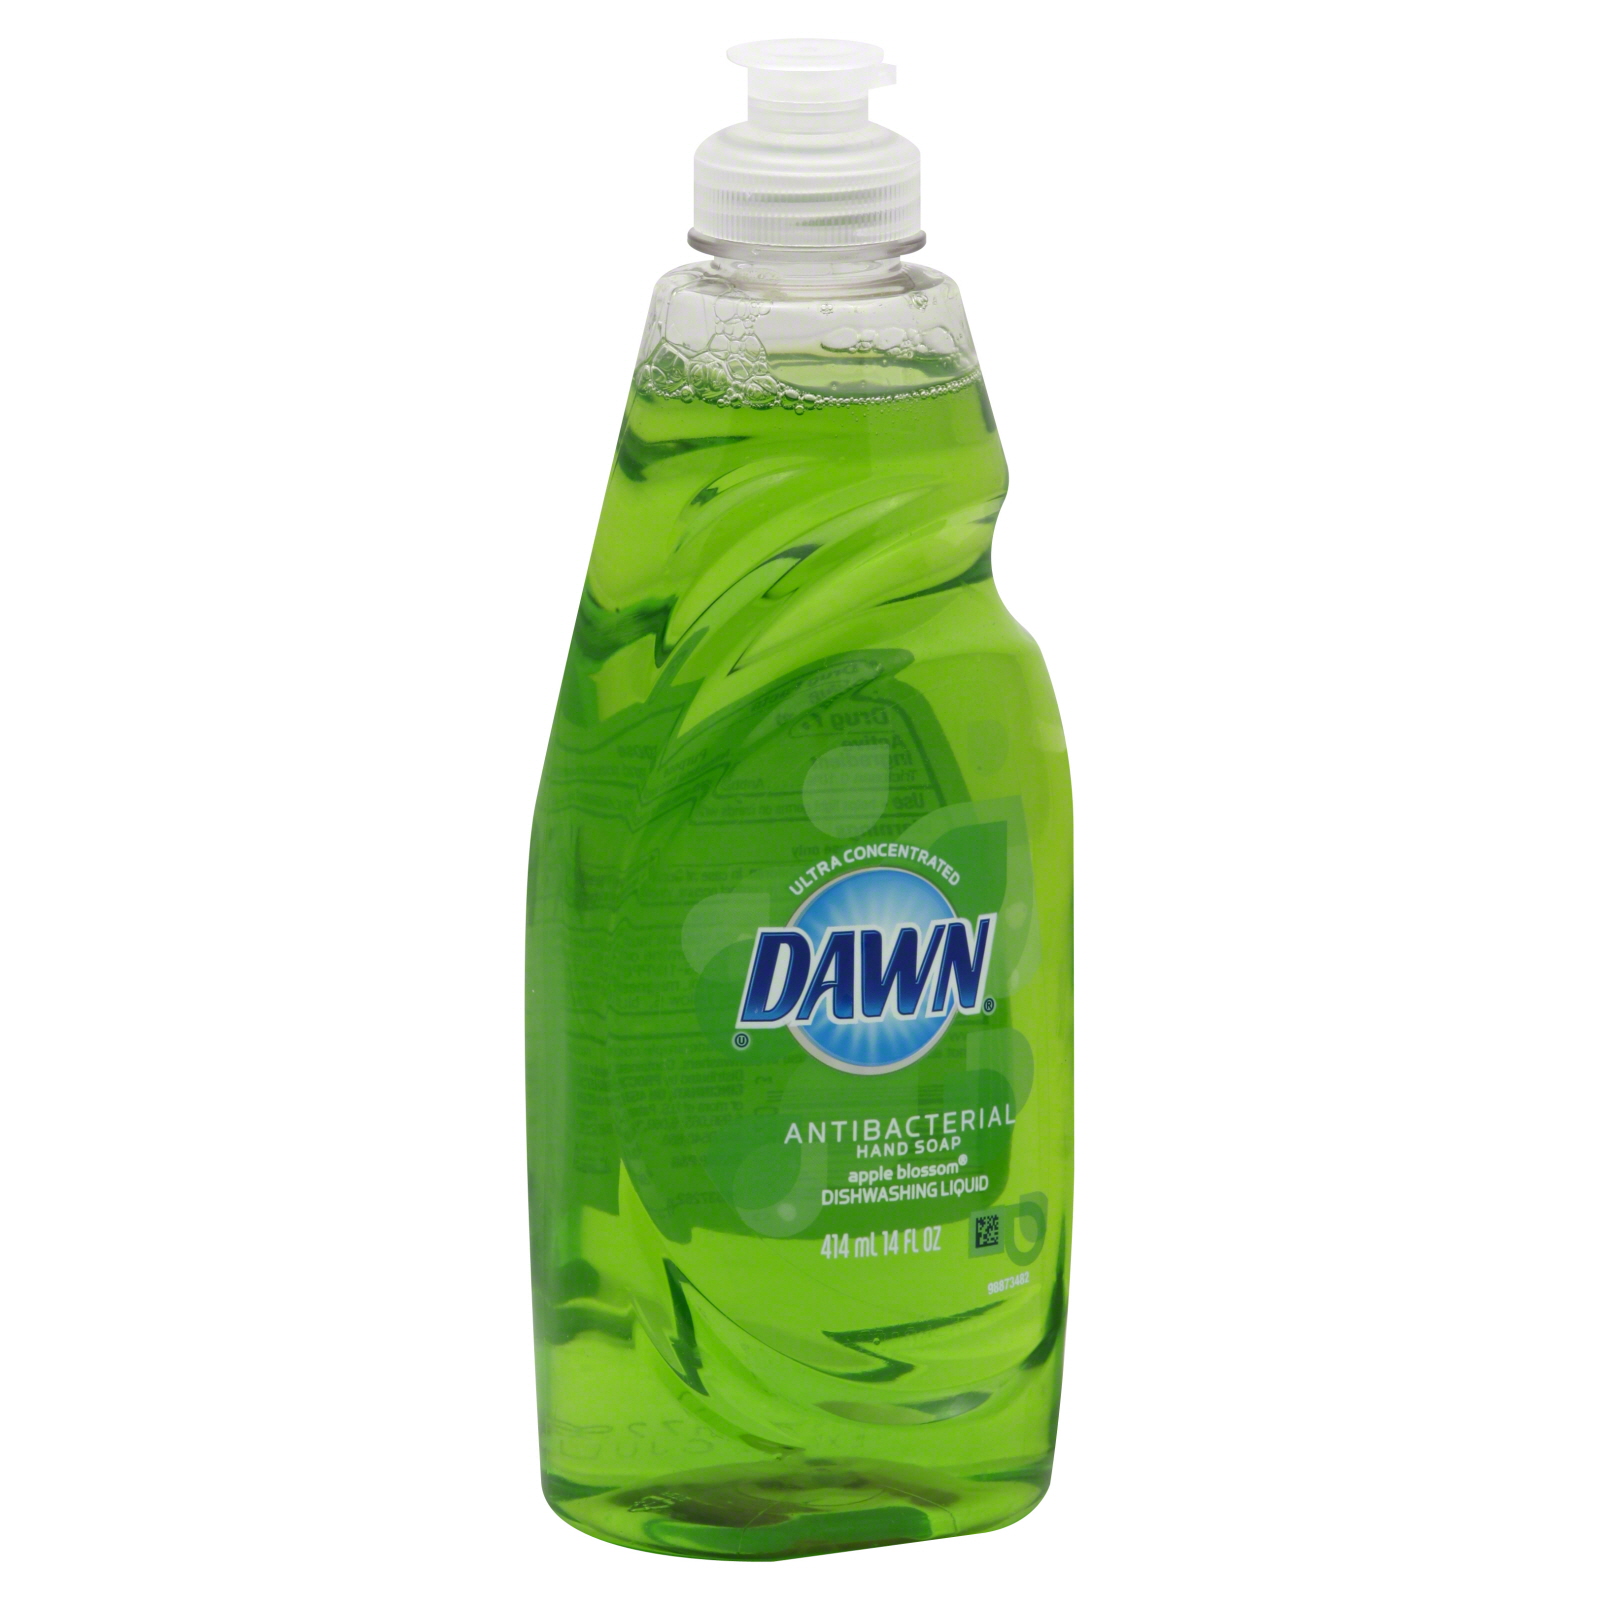 Dawn Dishwashing Liquid, Antibacterial Hand Soap, Ultra Concentrated, Apple Blossom, 14 fl oz (414 ml)